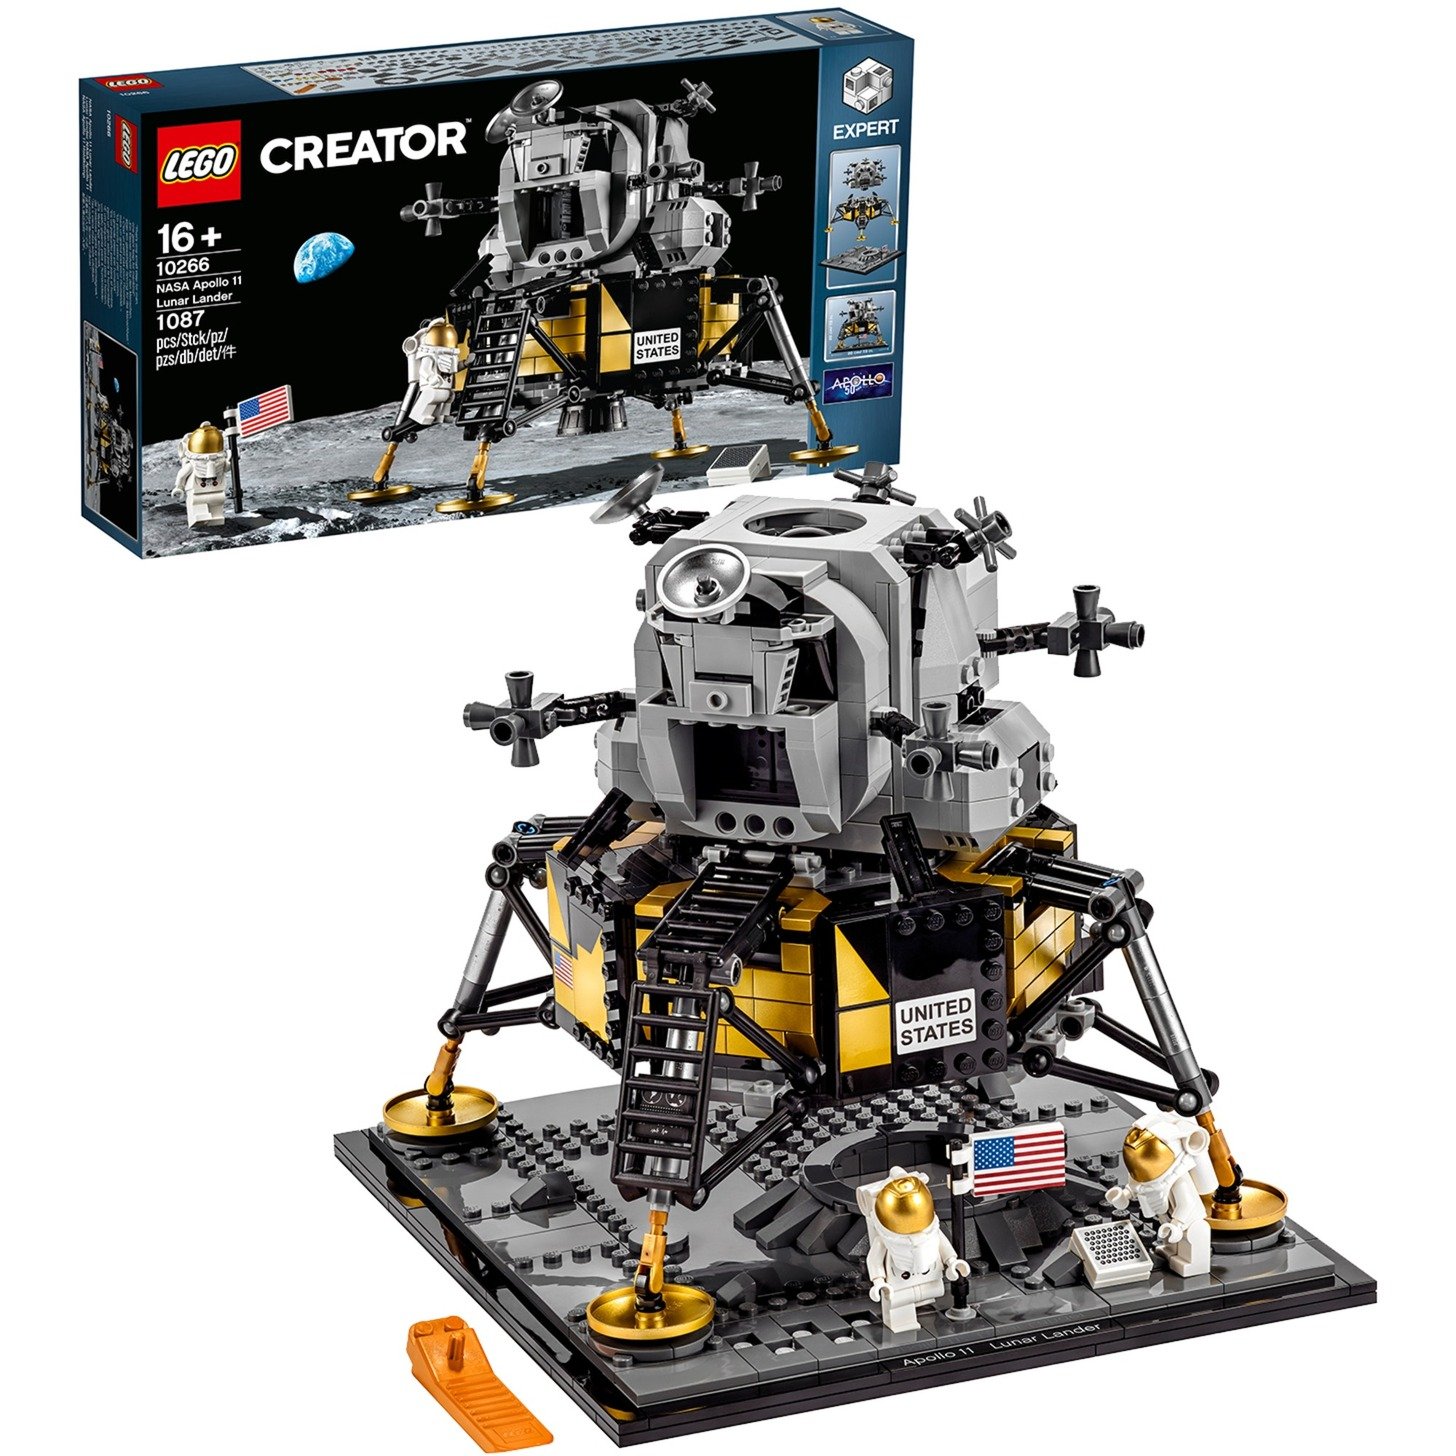 Spielzeug: Lego 10266 Creator Expert NASA Apollo 11 Mondlandefähre